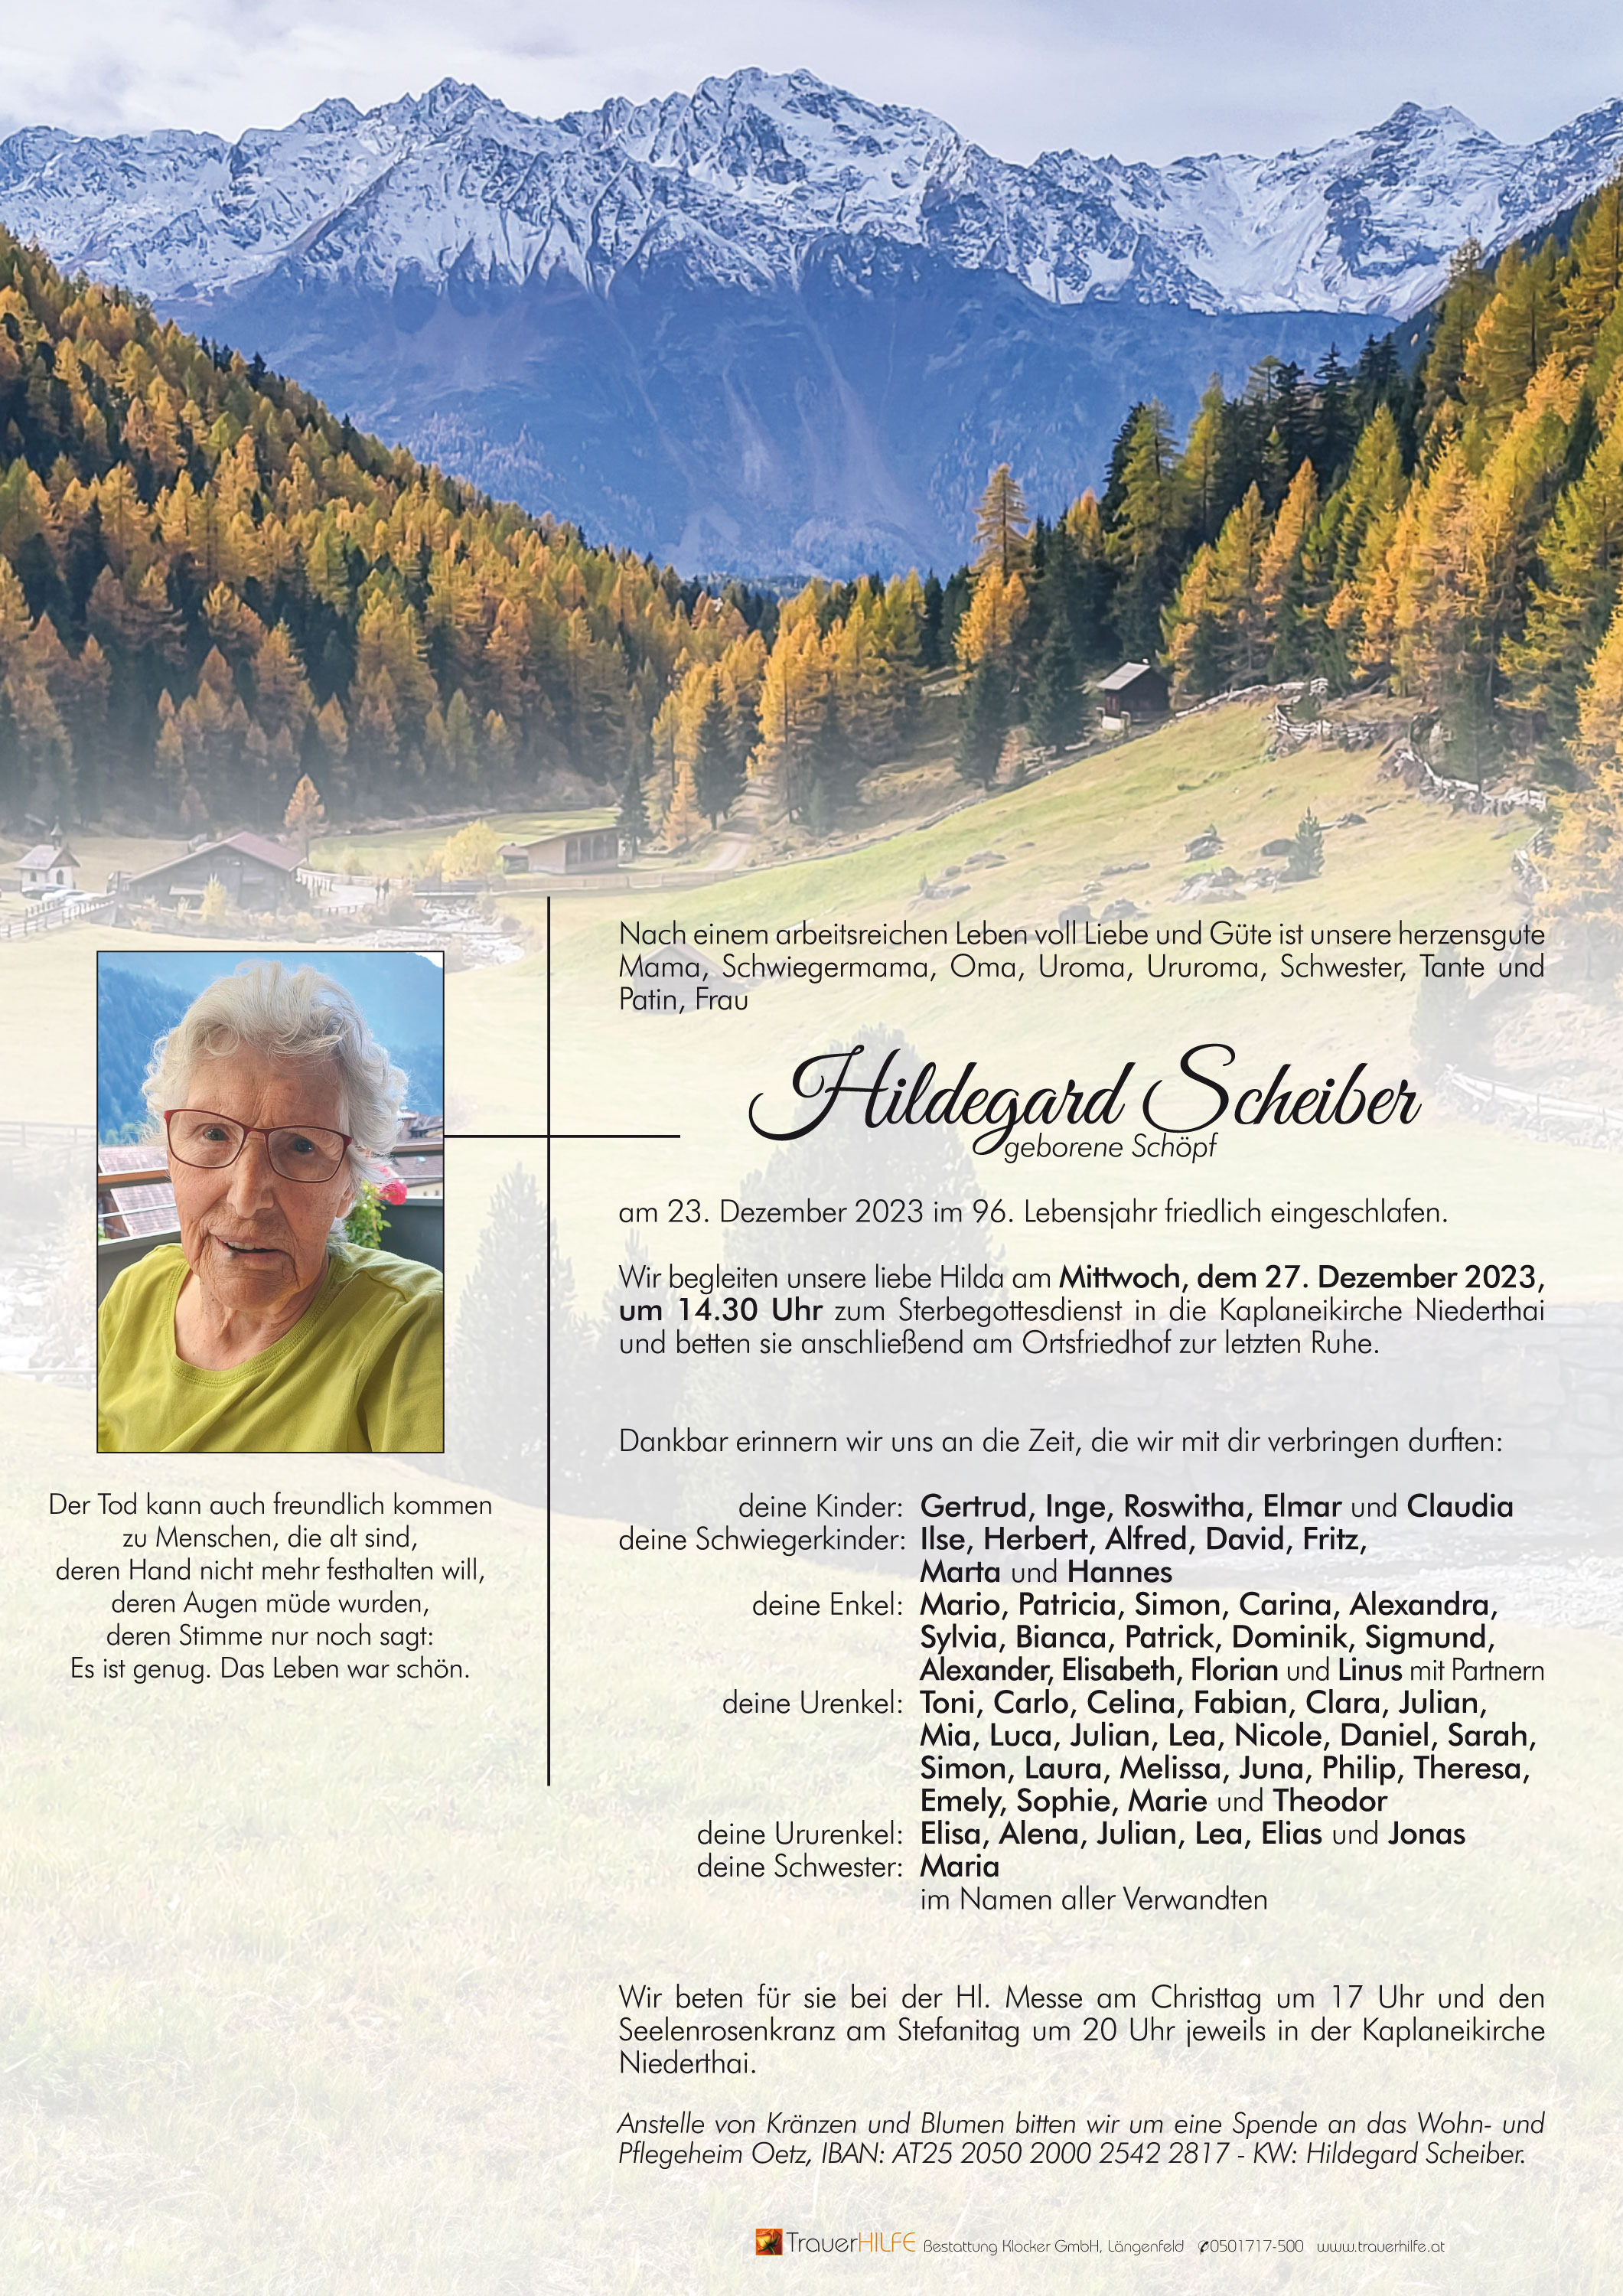 Hildegard Scheiber